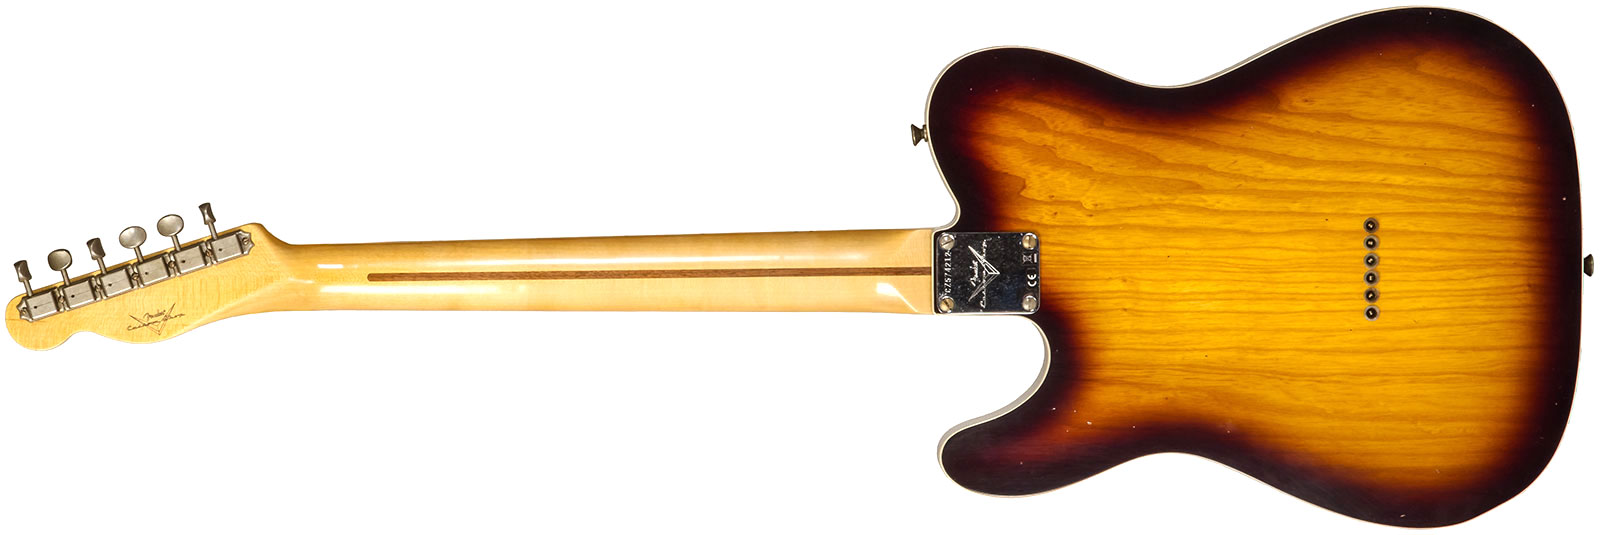 Fender Custom Shop Tele Thinline 50s Mn #cz574212 - Journeyman Relic Aged 2-color Sunburst - E-Gitarre in Teleform - Variation 2